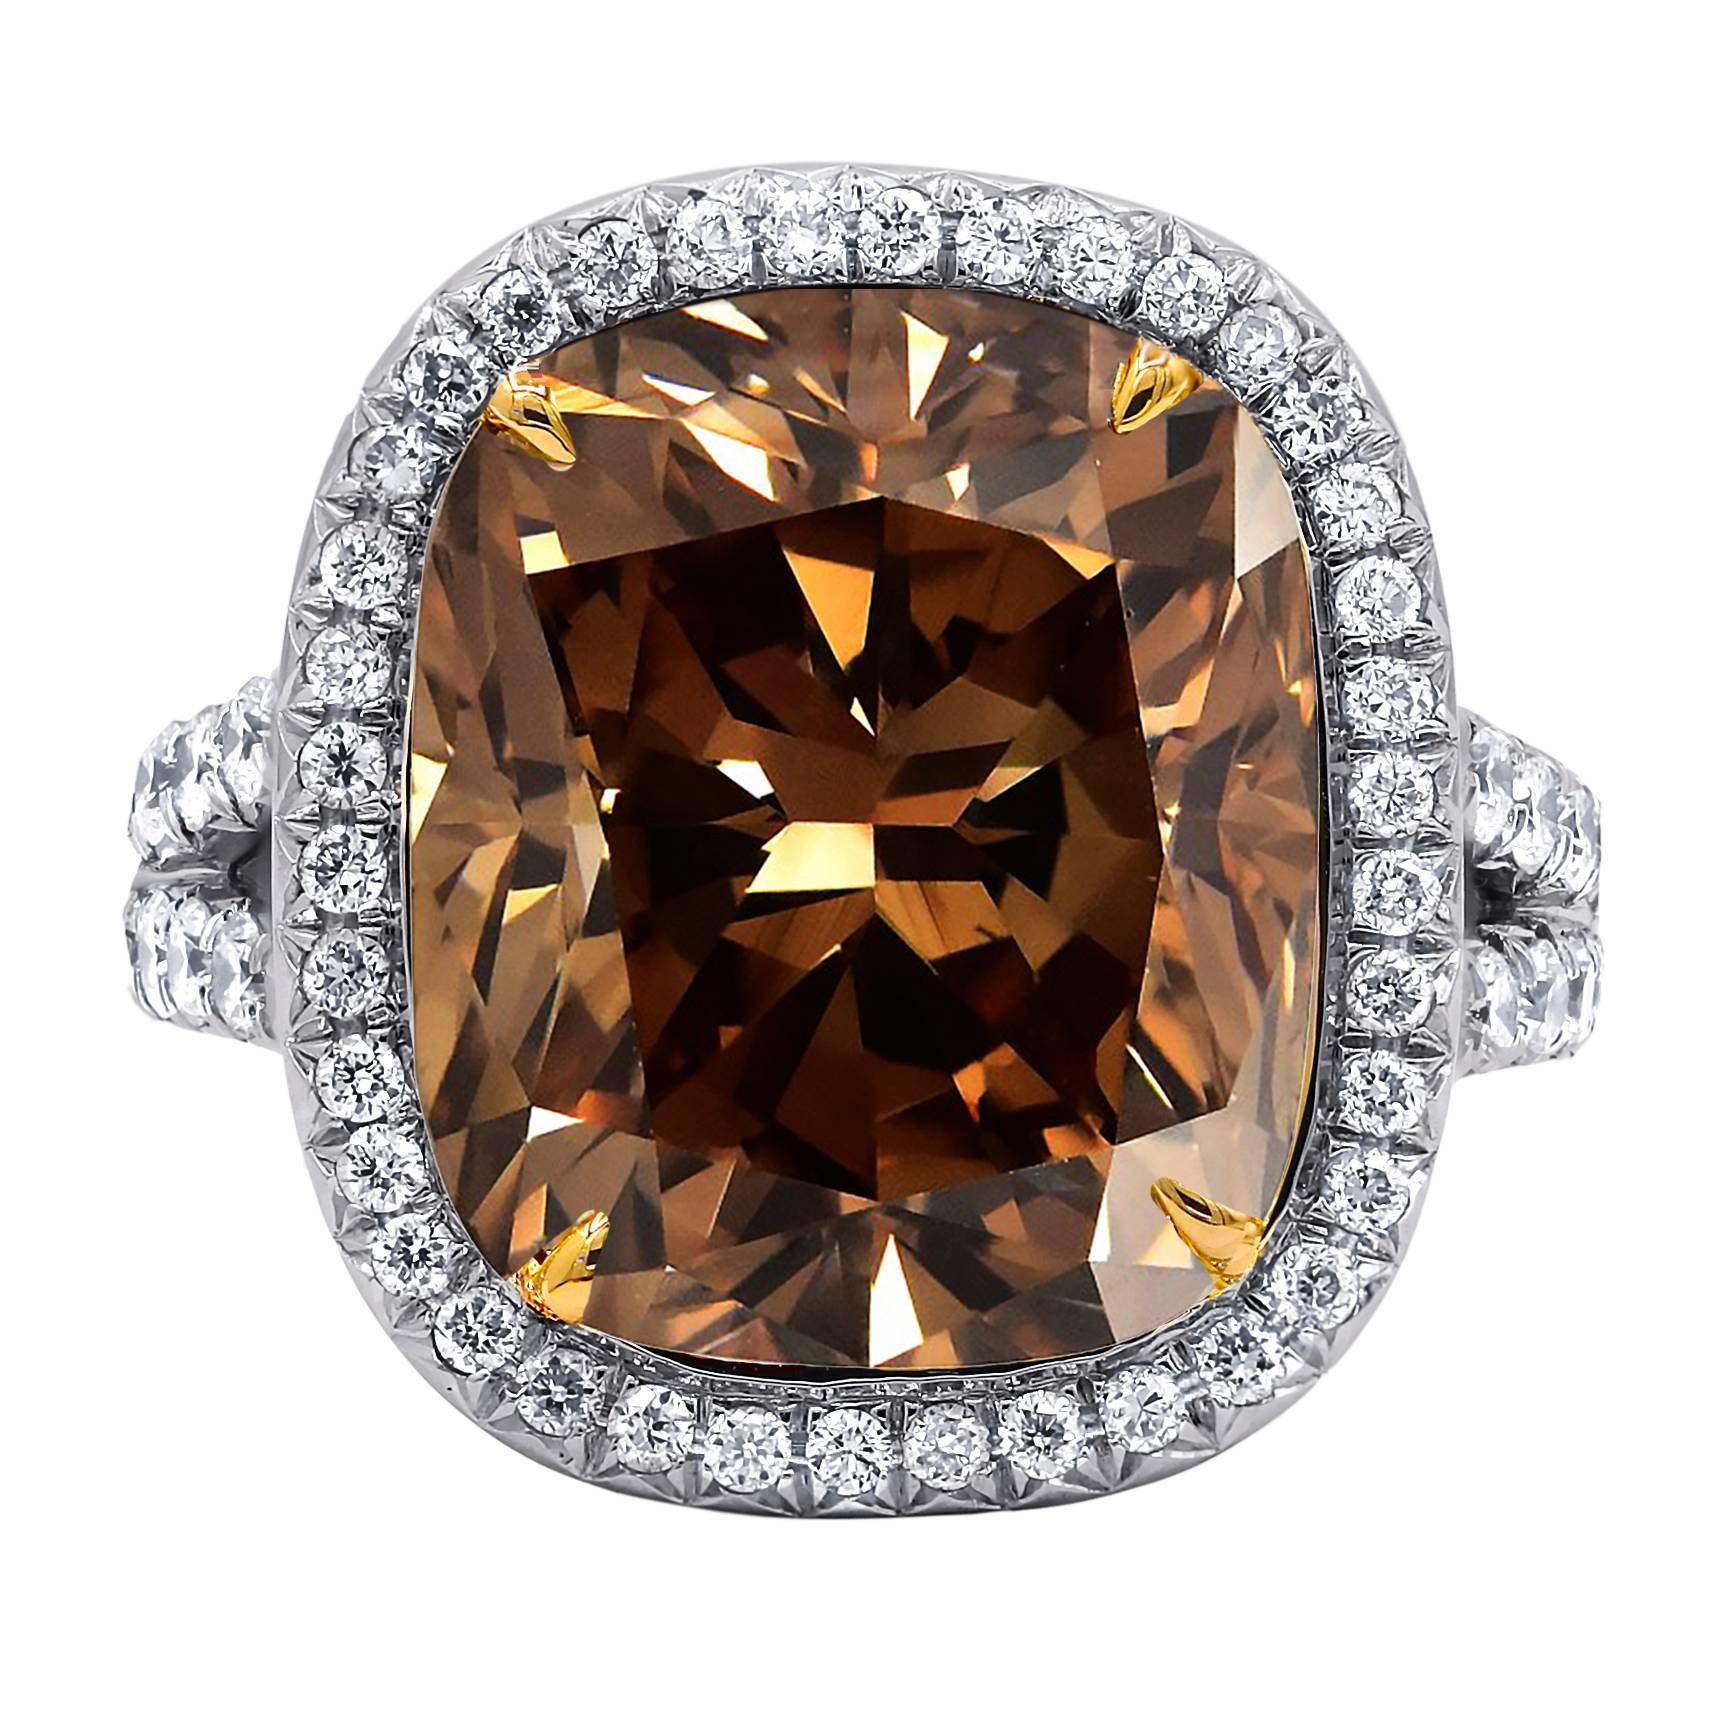 10.30 Carat GIA Certified Fancy Brown Diamond Ring